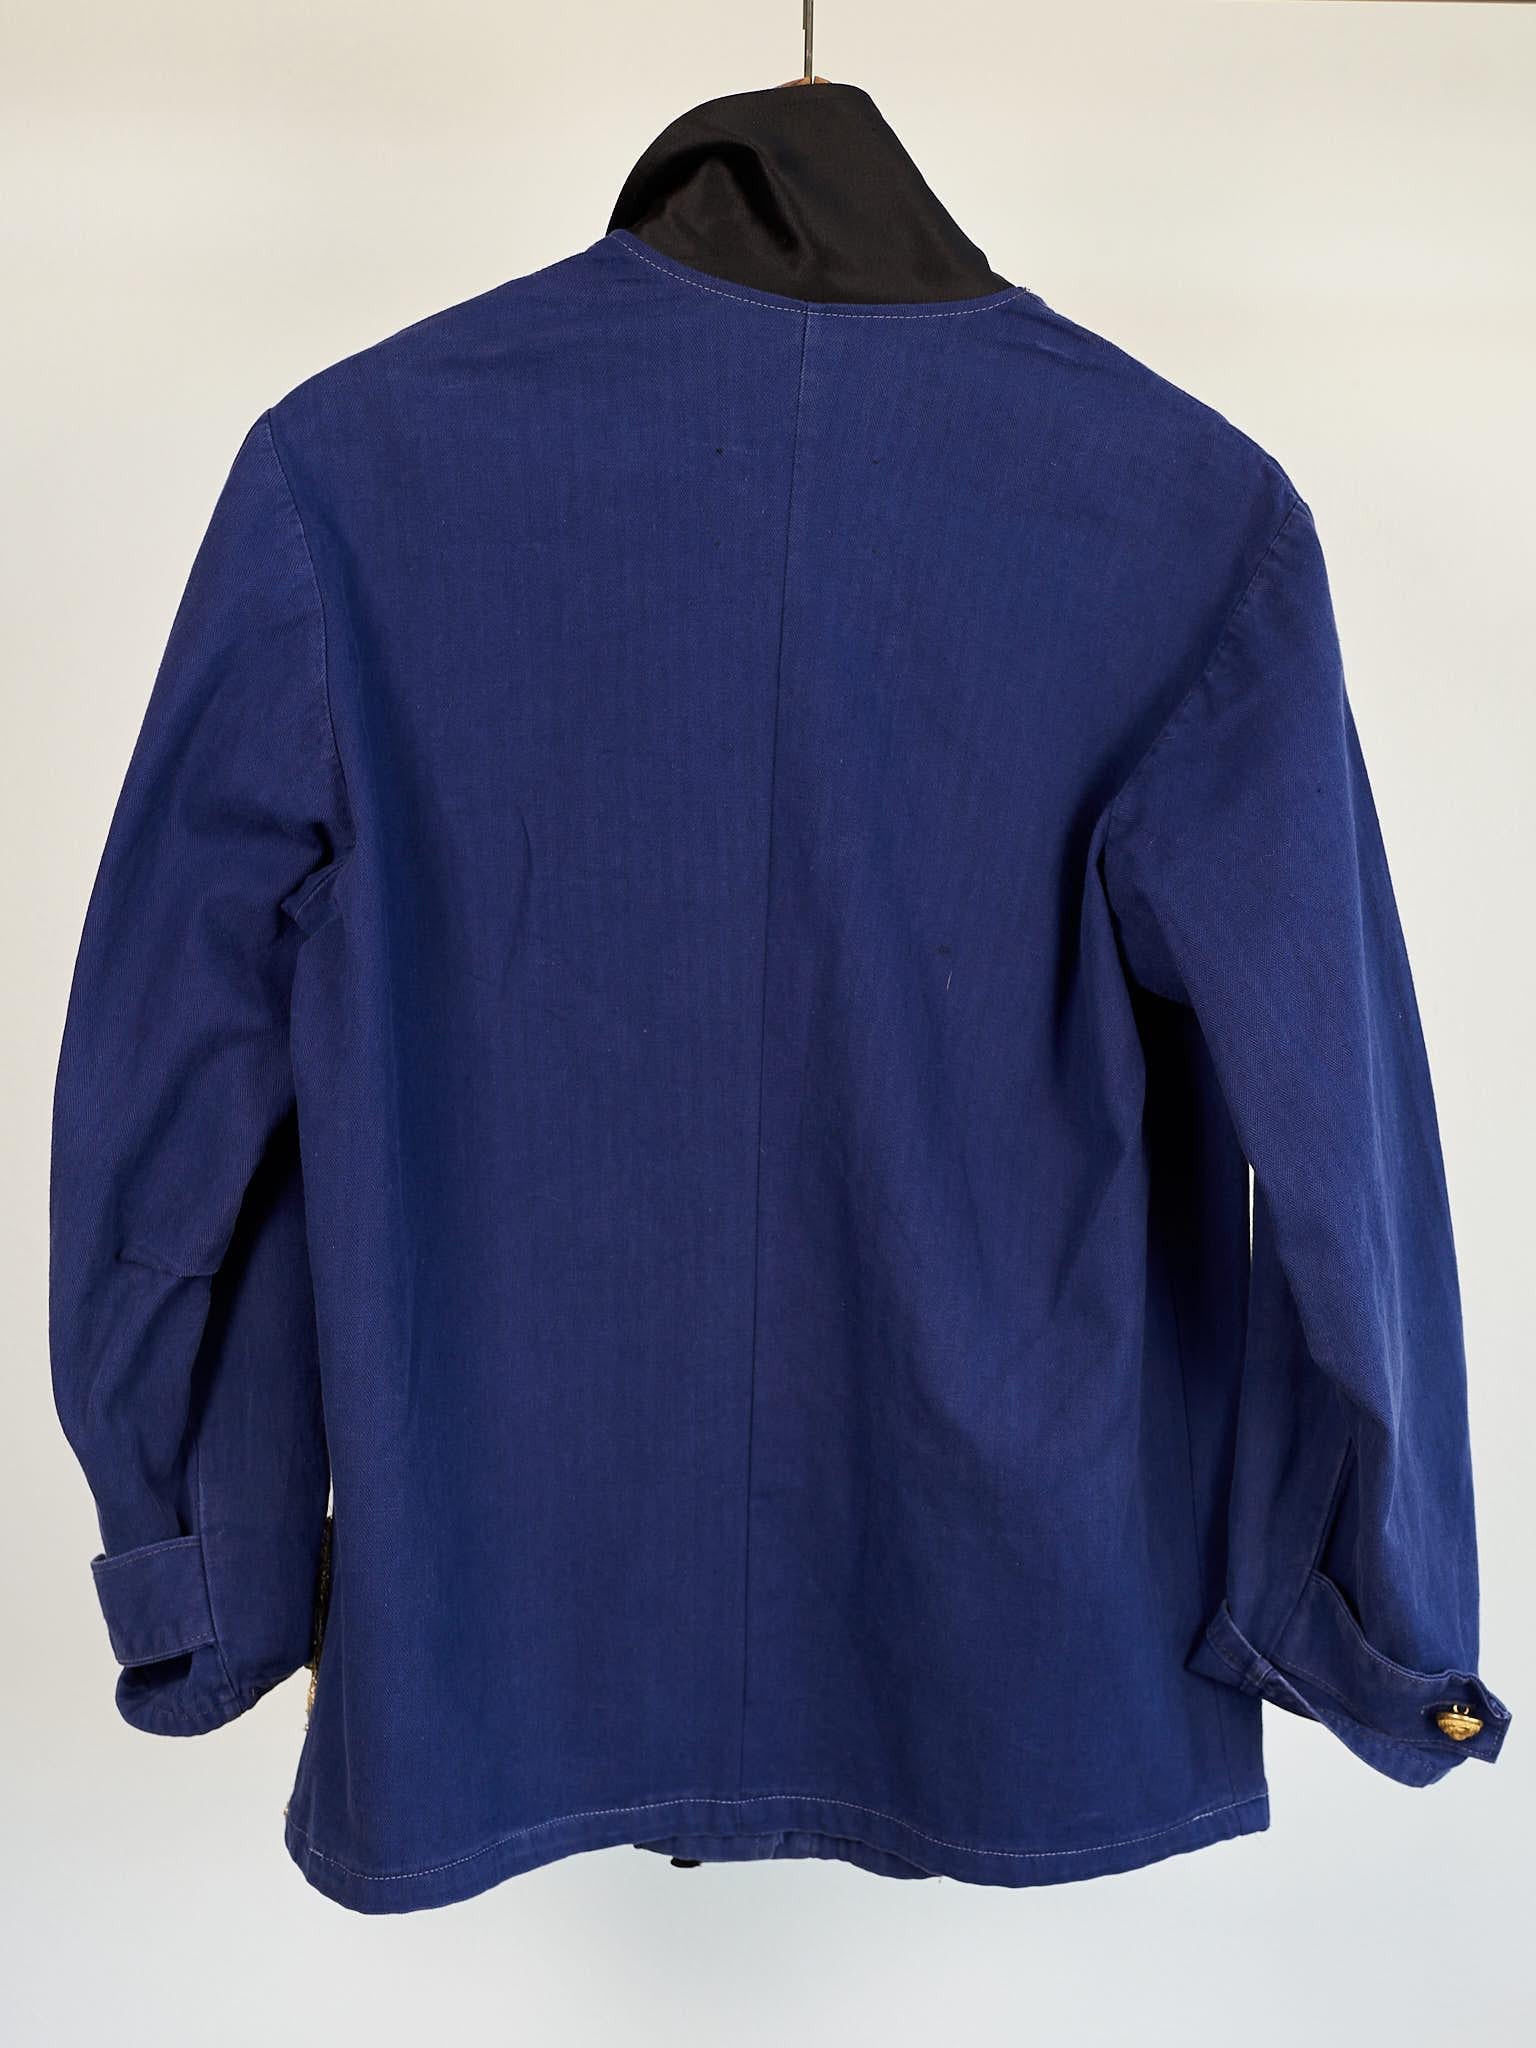 Blue Jacket Gold Lurex Tweed Jacket Work Wear France Repurposed Medium In New Condition For Sale In Los Angeles, CA